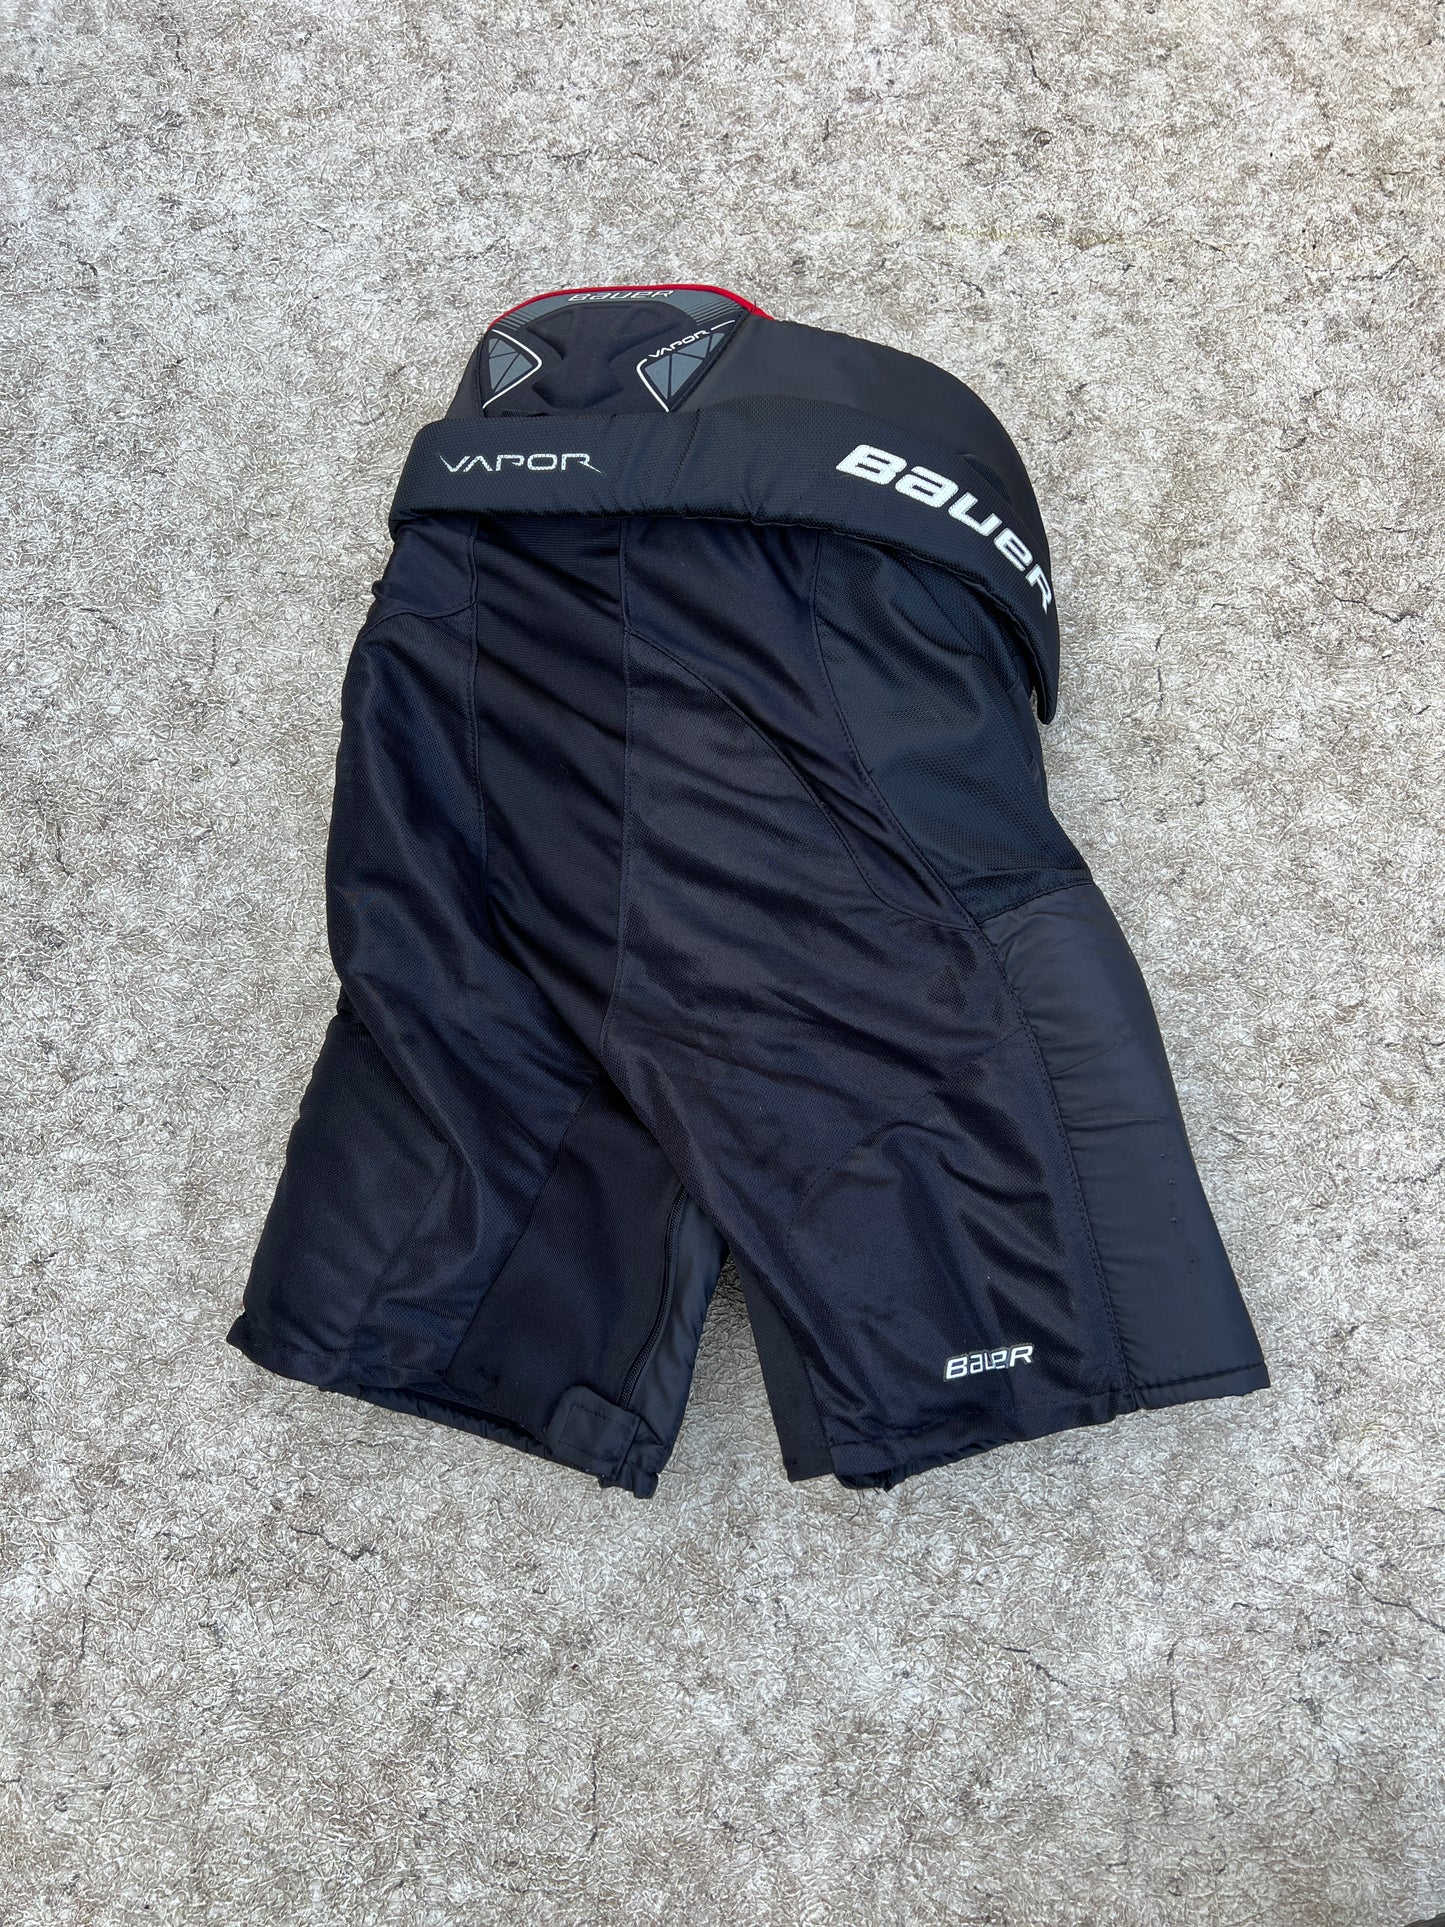 Hockey Pants Men's Senior Size Small Bauer Vapor X80 Tapered Like New